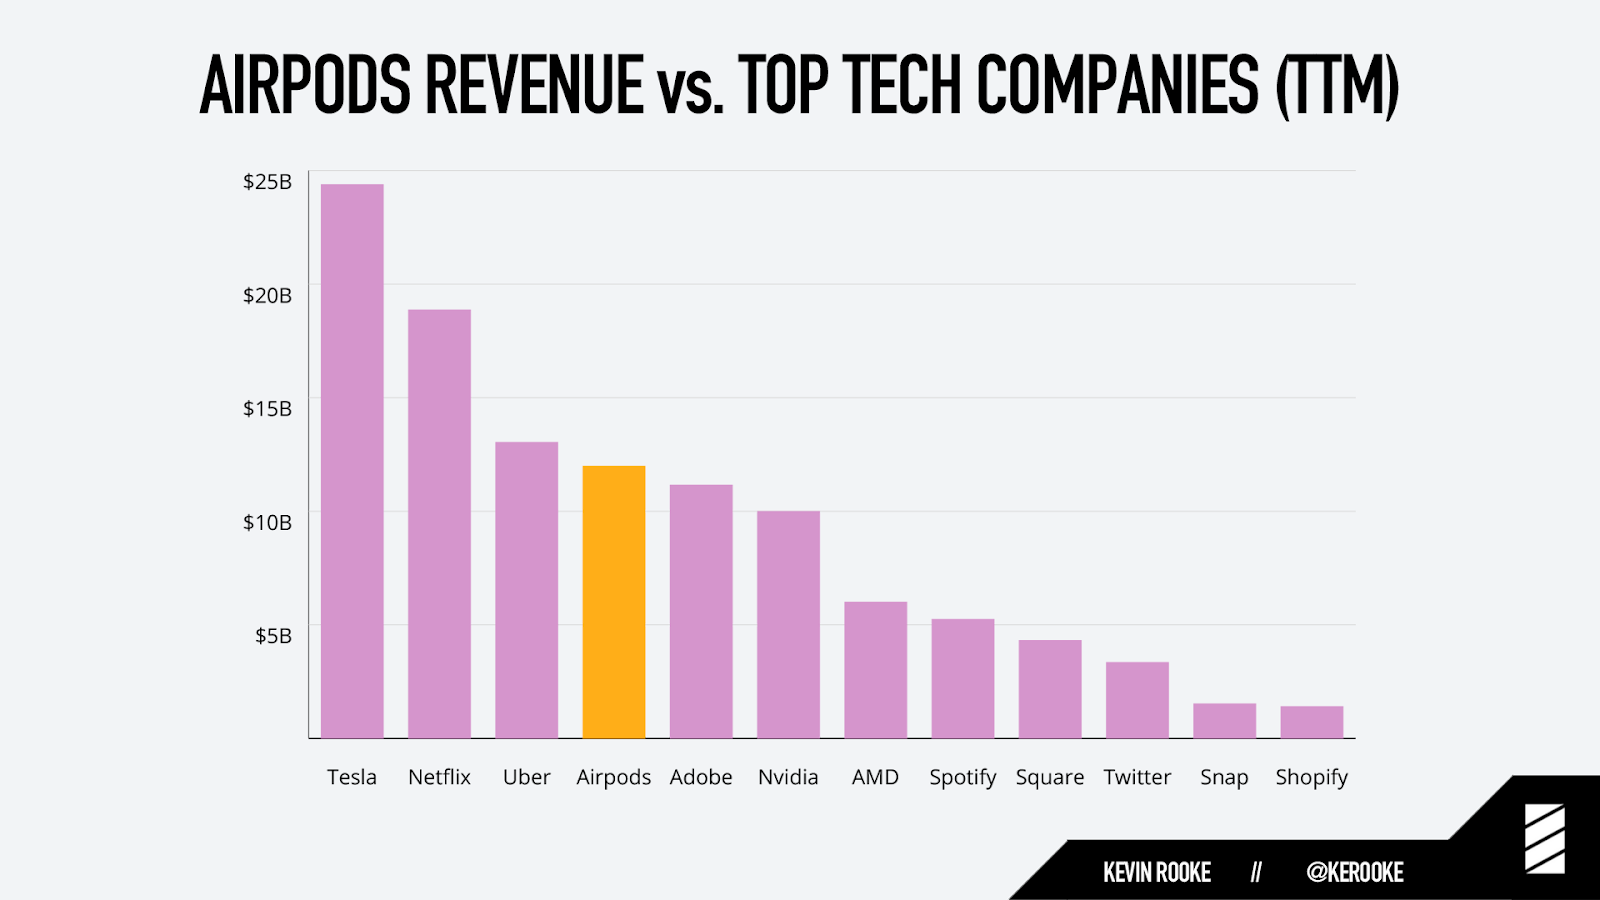 AirPods on teeninud rohkem tulu kui Spotify, Twitter, Snap ja Shopify kokku -